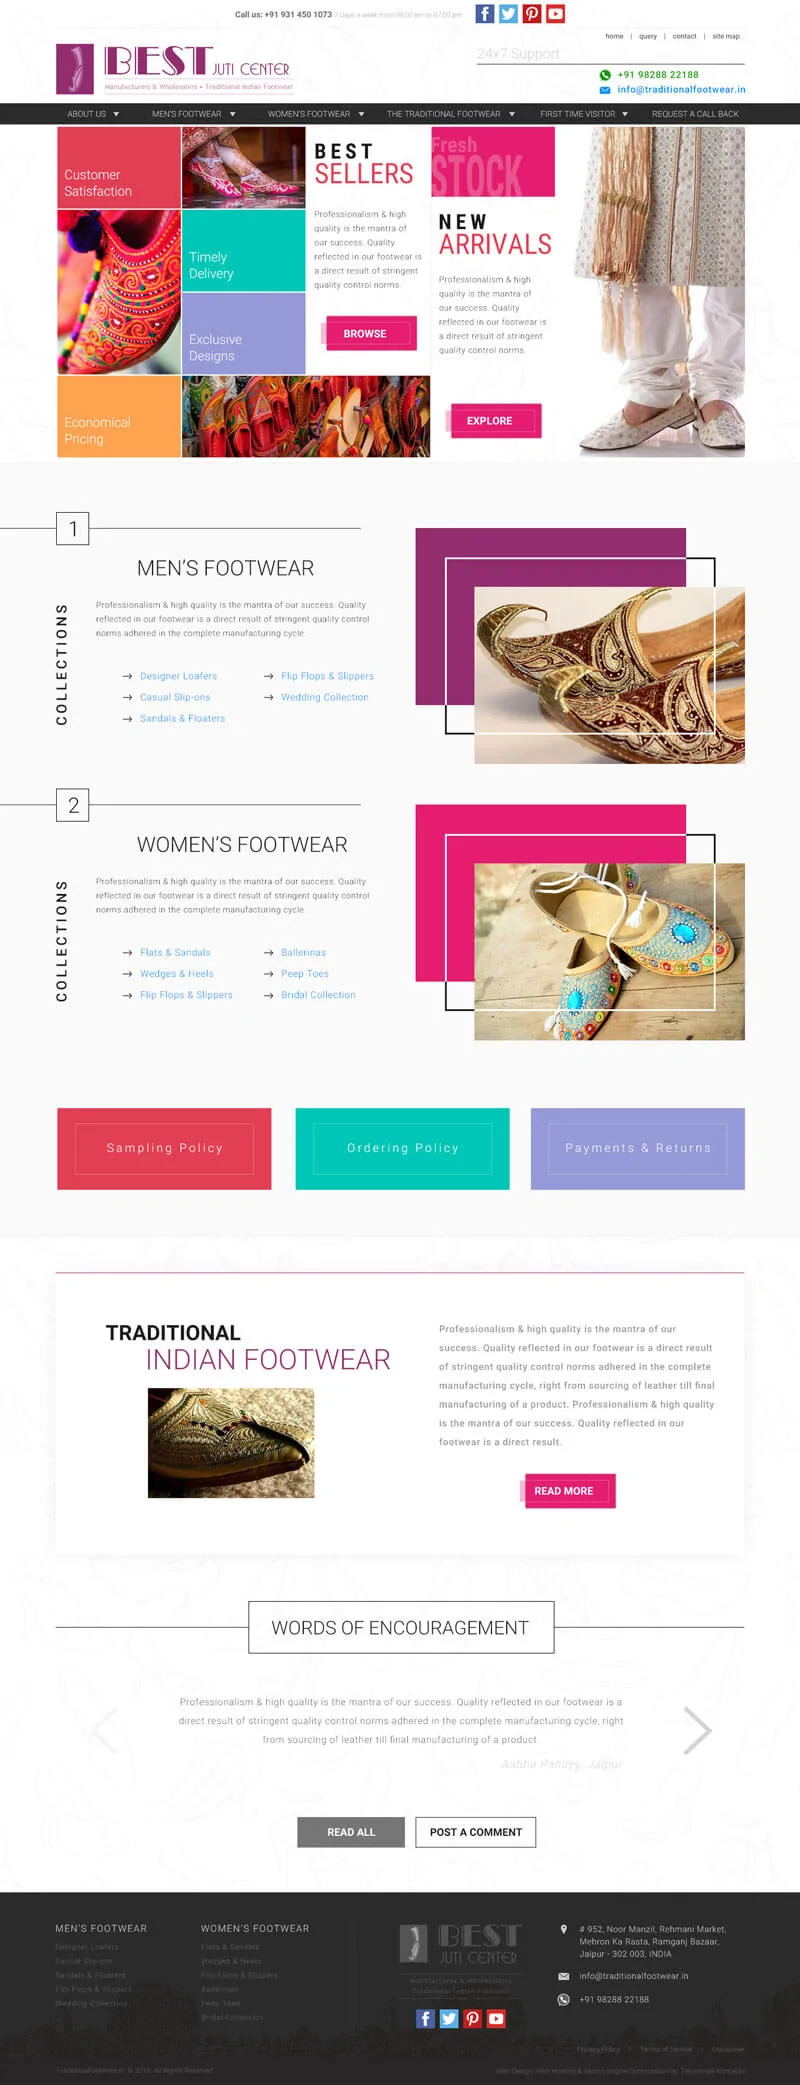 Traditional Footwear New Website